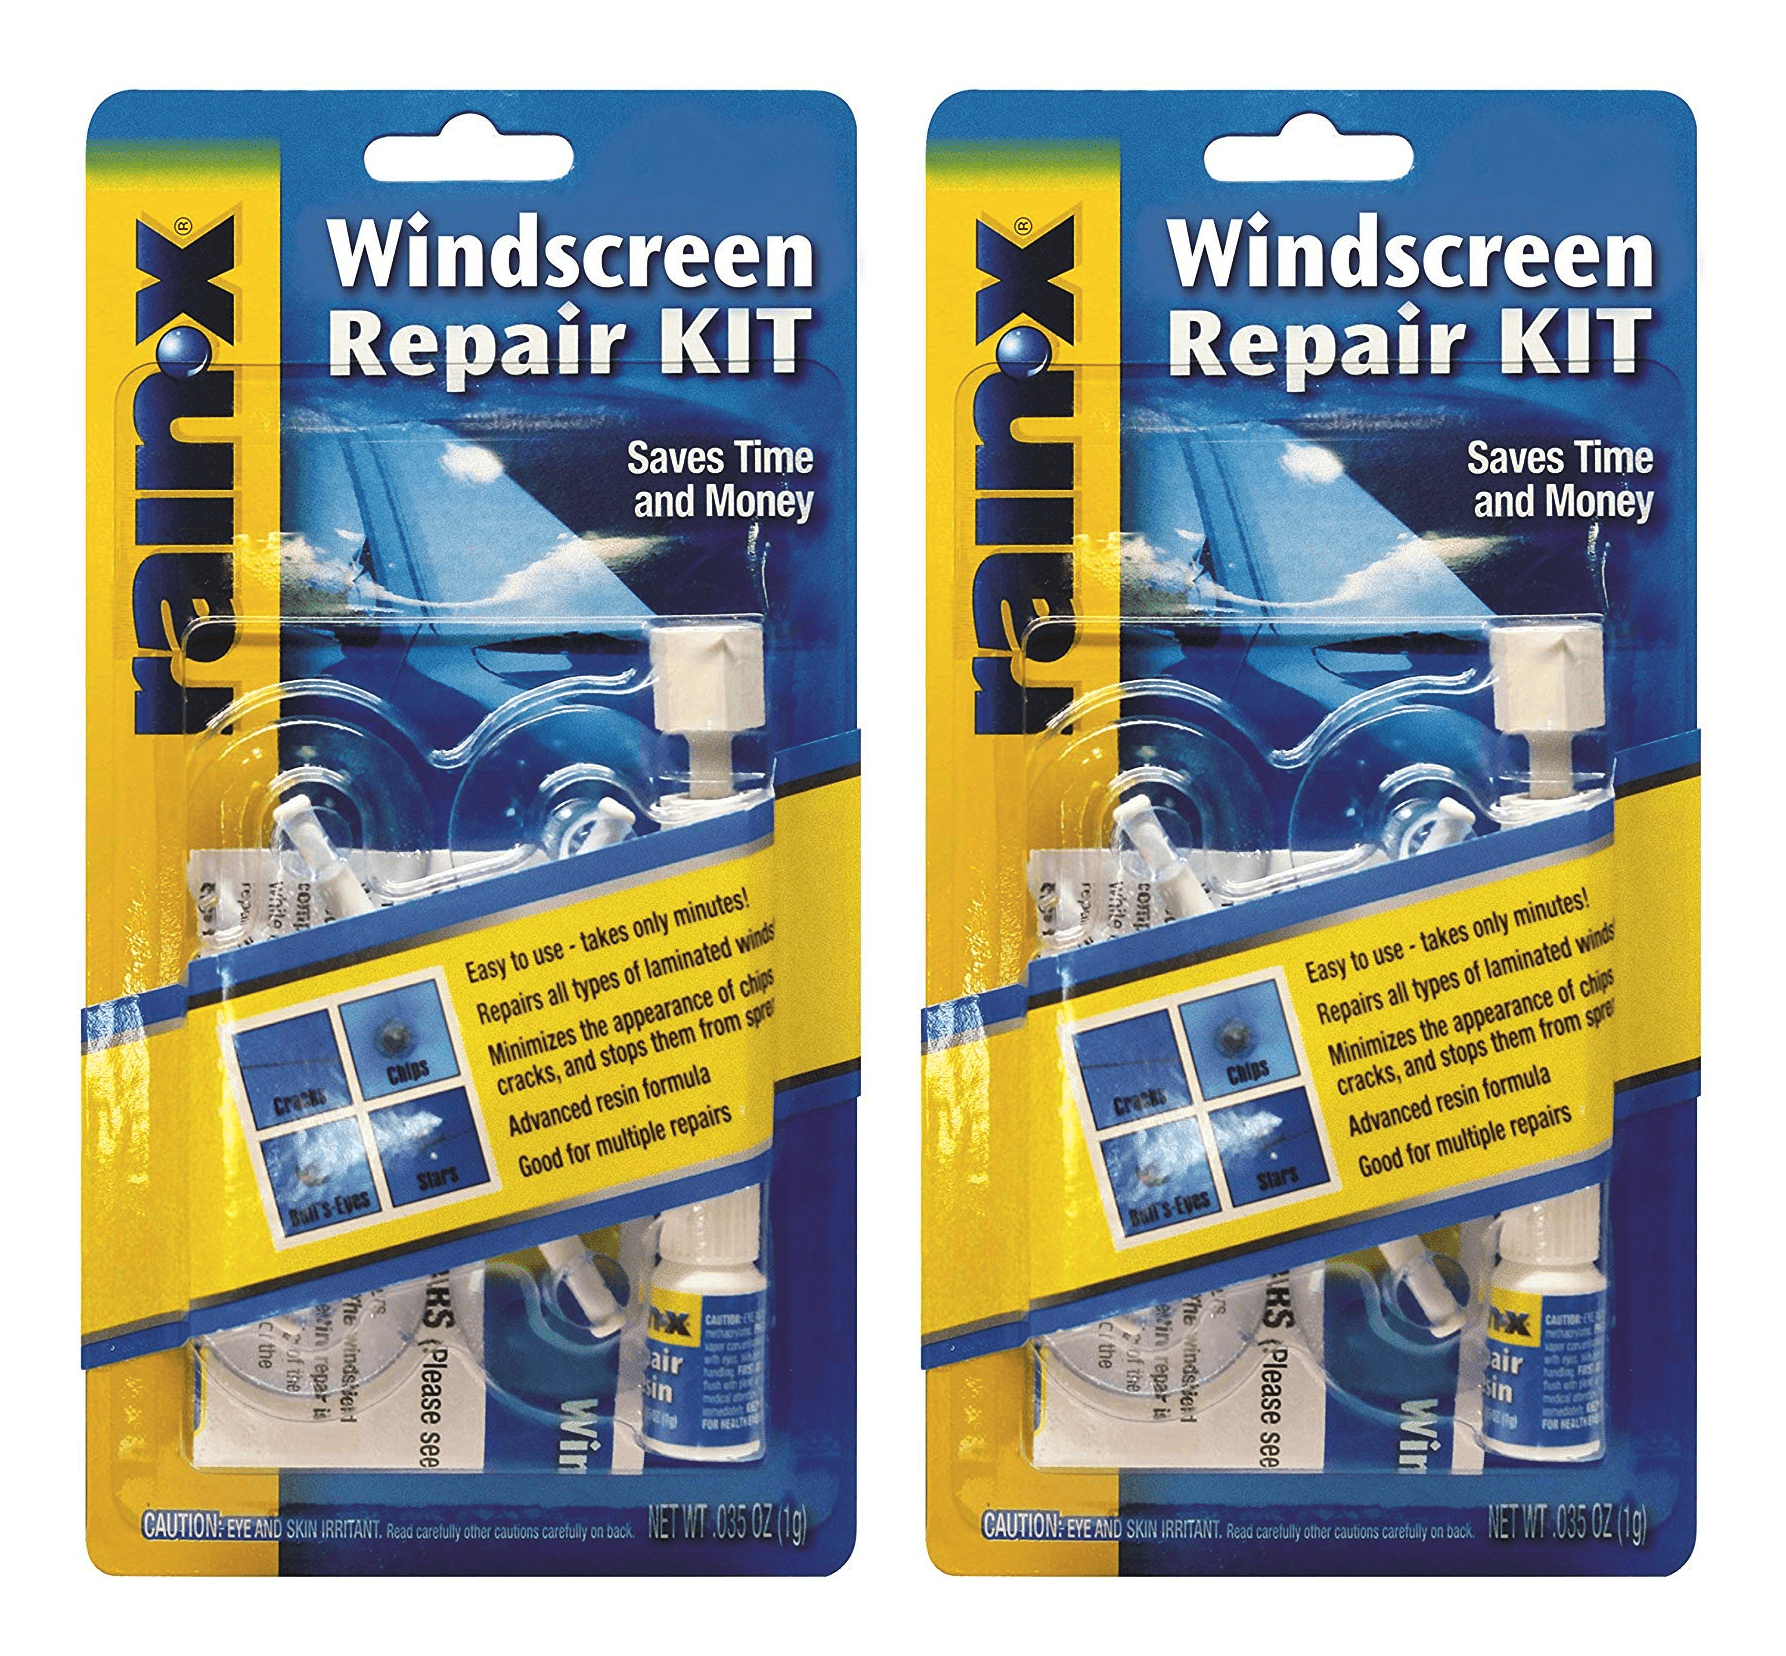 VICASKY 1 Set Car Tools Automotive Tools Windshield Scratch Repair Kit Car  Window Repair Tool Glass Scratch Repair Kits Window Screen Polishing Tool